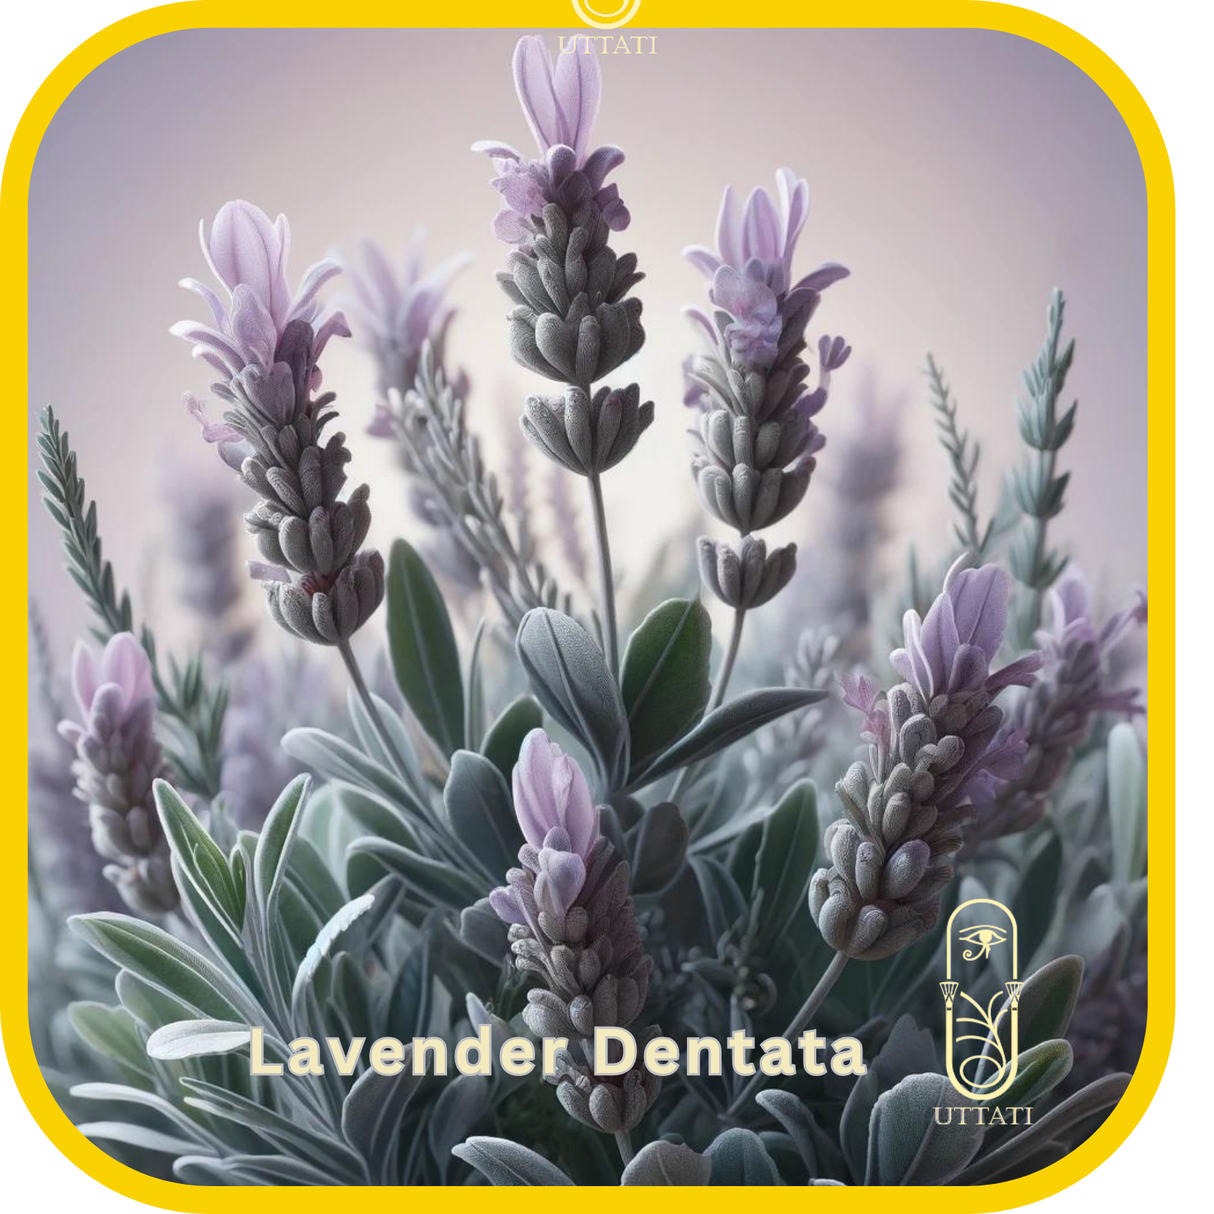 Lavender Dentata